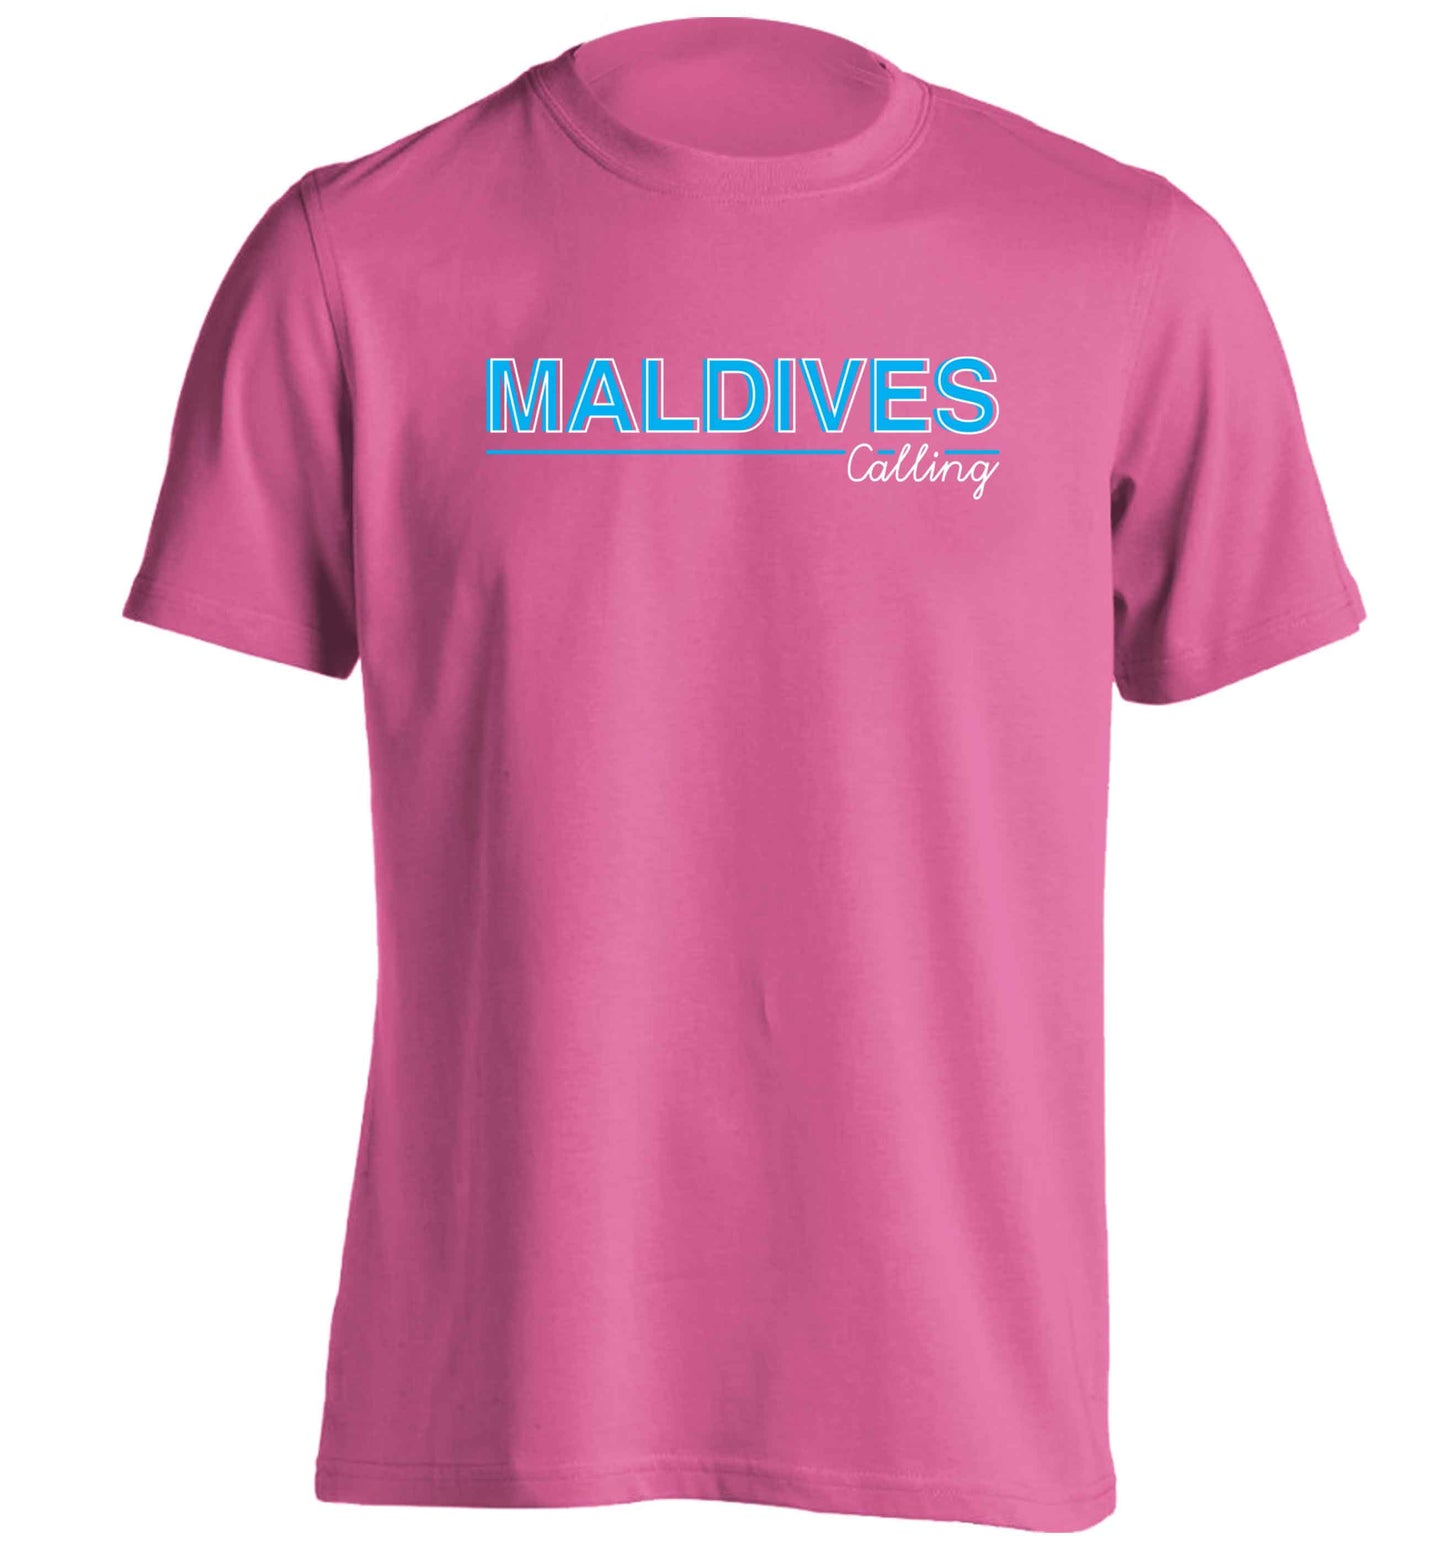 Maldives calling adults unisex pink Tshirt 2XL